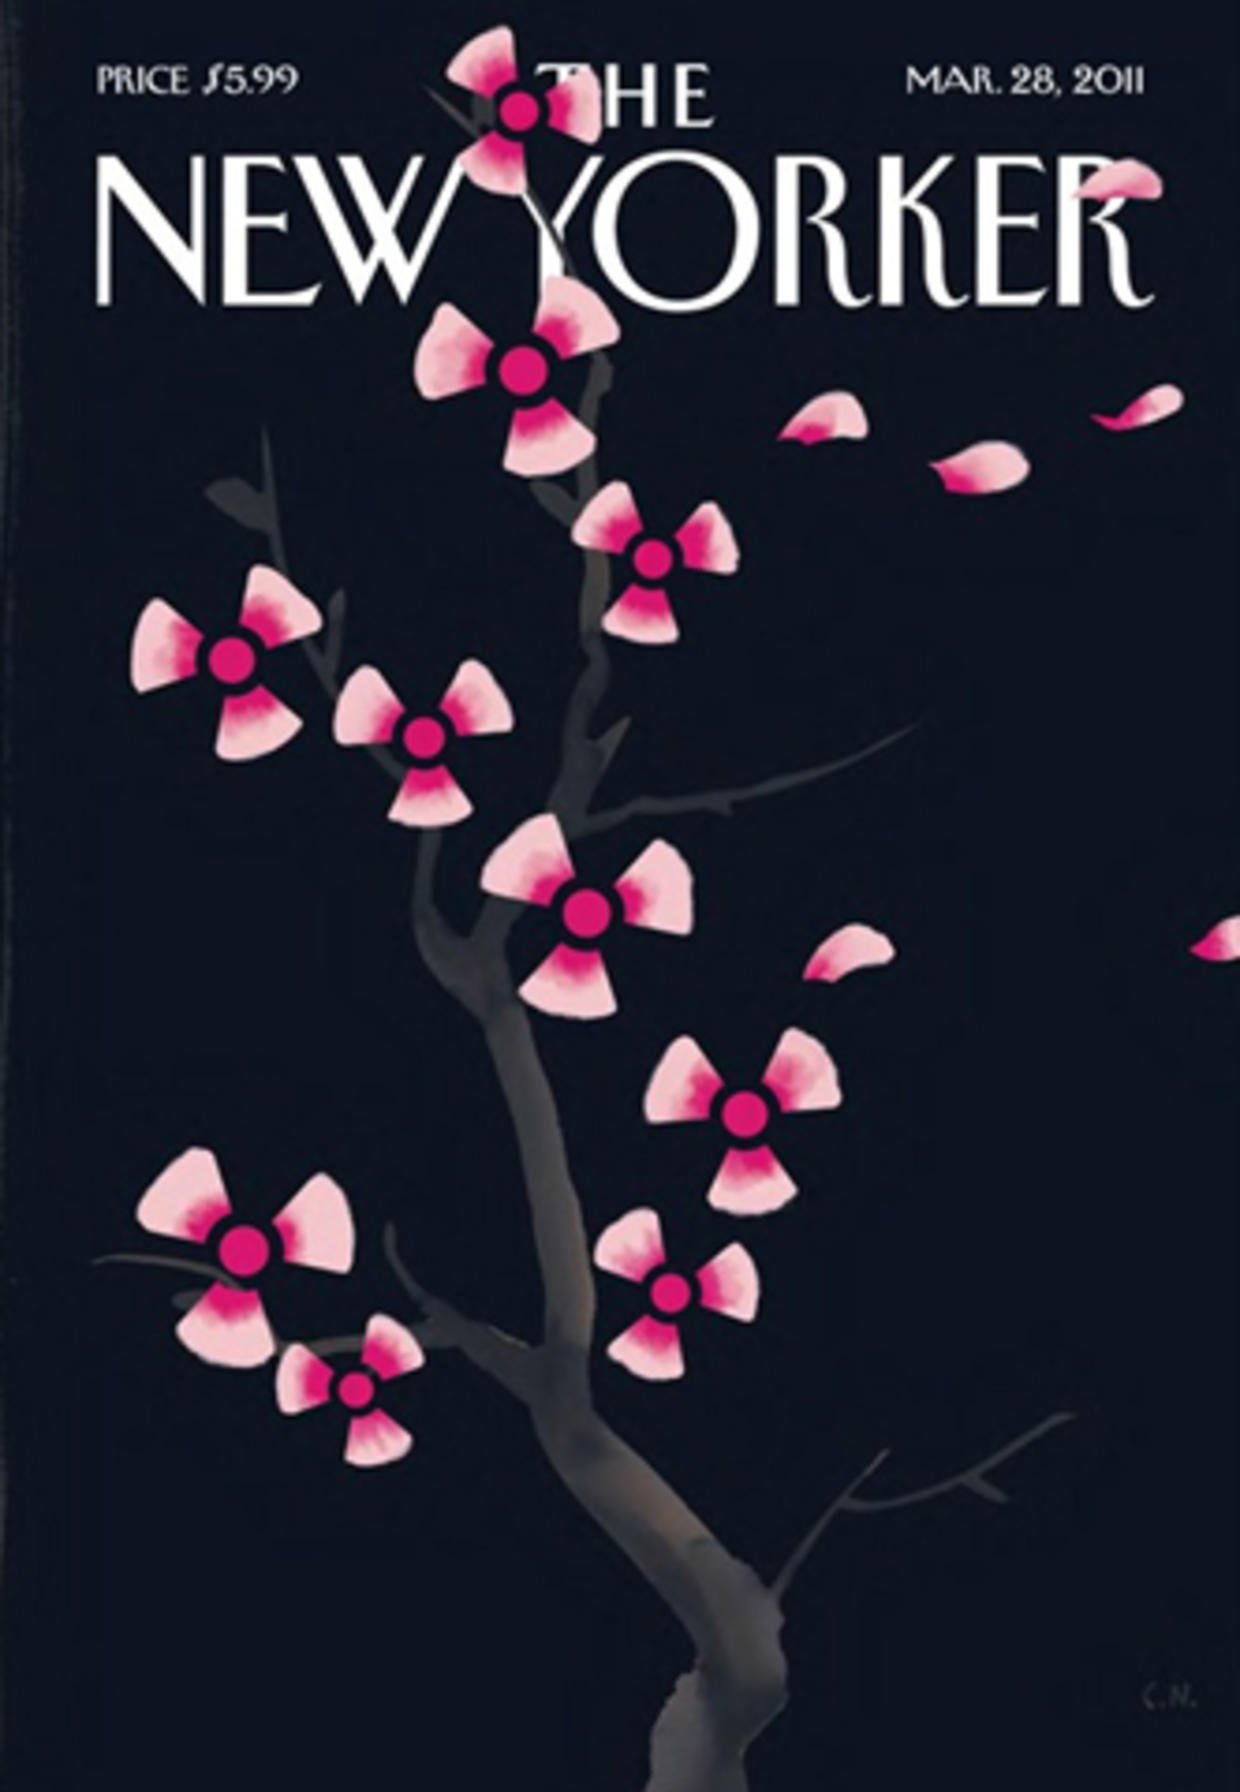 Classic New Yorker Magazine Covers Cbs News 